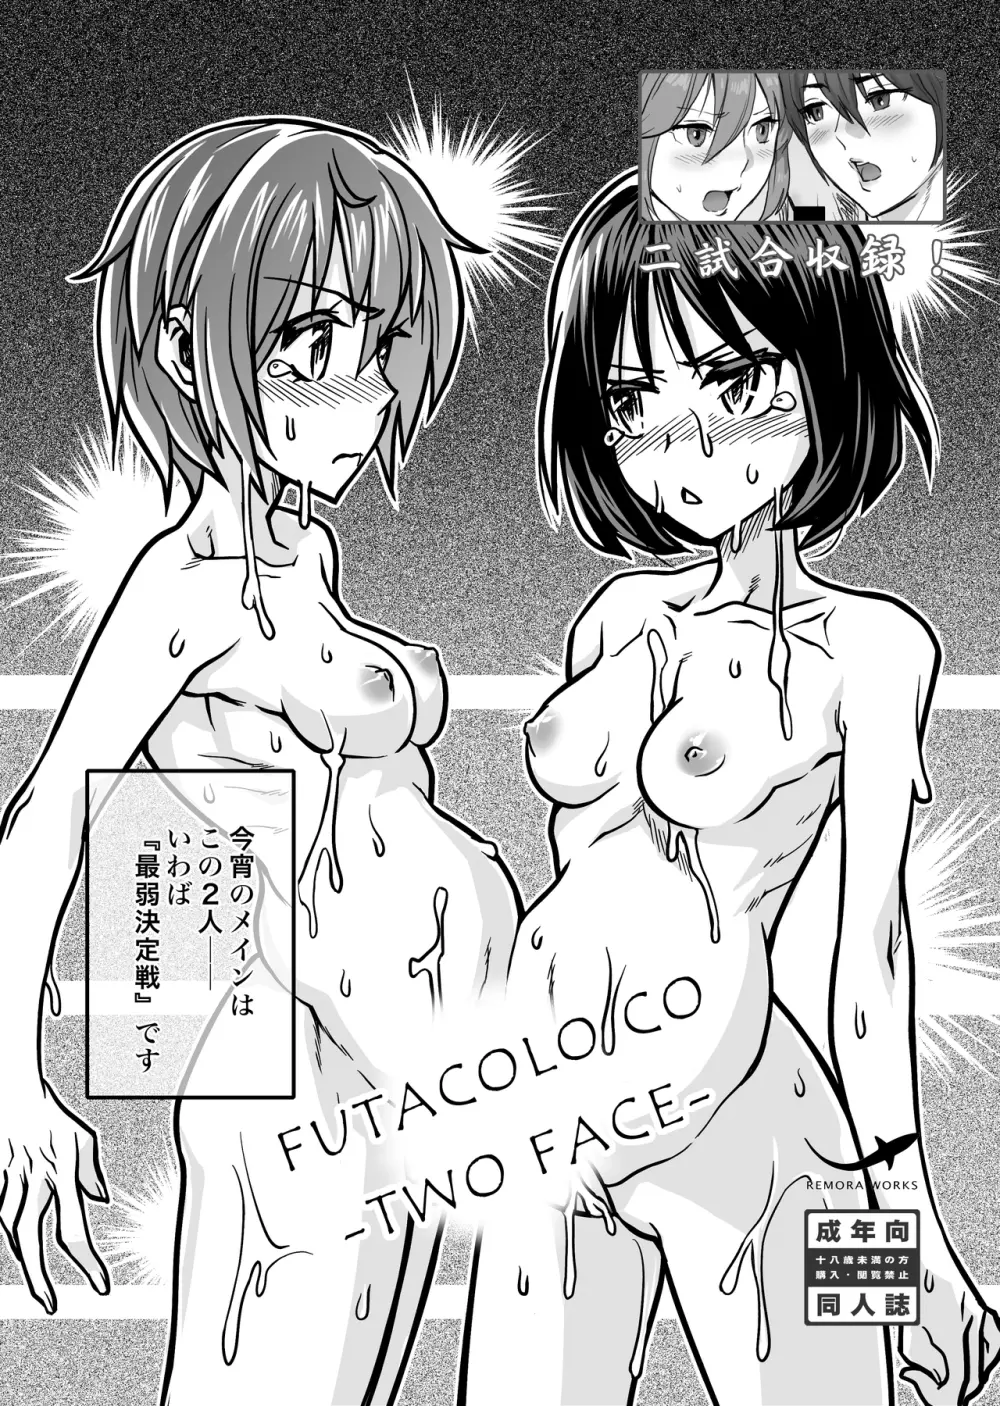 [remora works] FUTACOLO CG -IDOLA- / FUTACOLO CO -TWO FACE- - page34